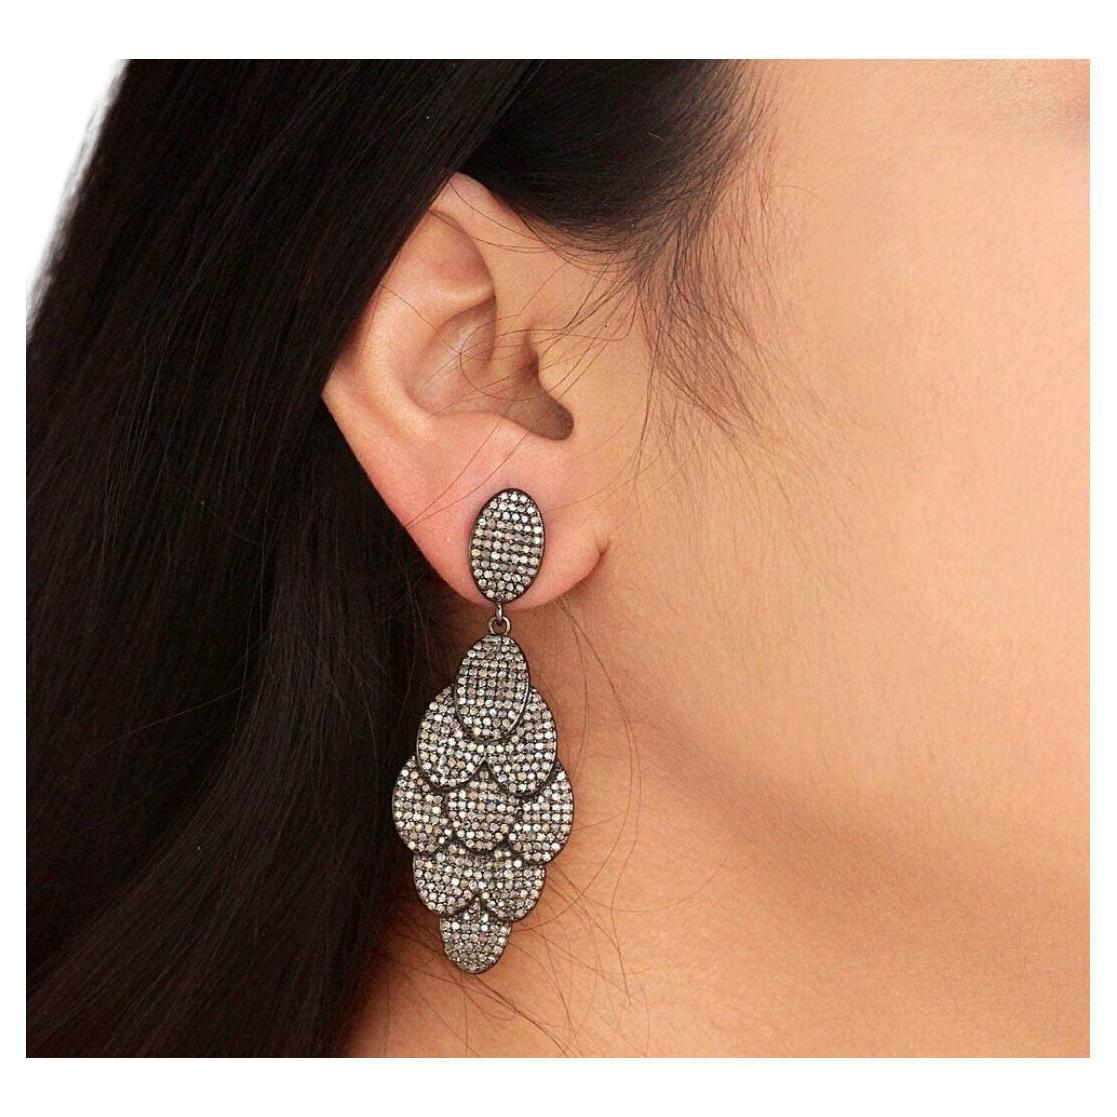 Natural Diamond Earring Handmade Dangle Earring 925 Sterling Silver Jewelry Gift